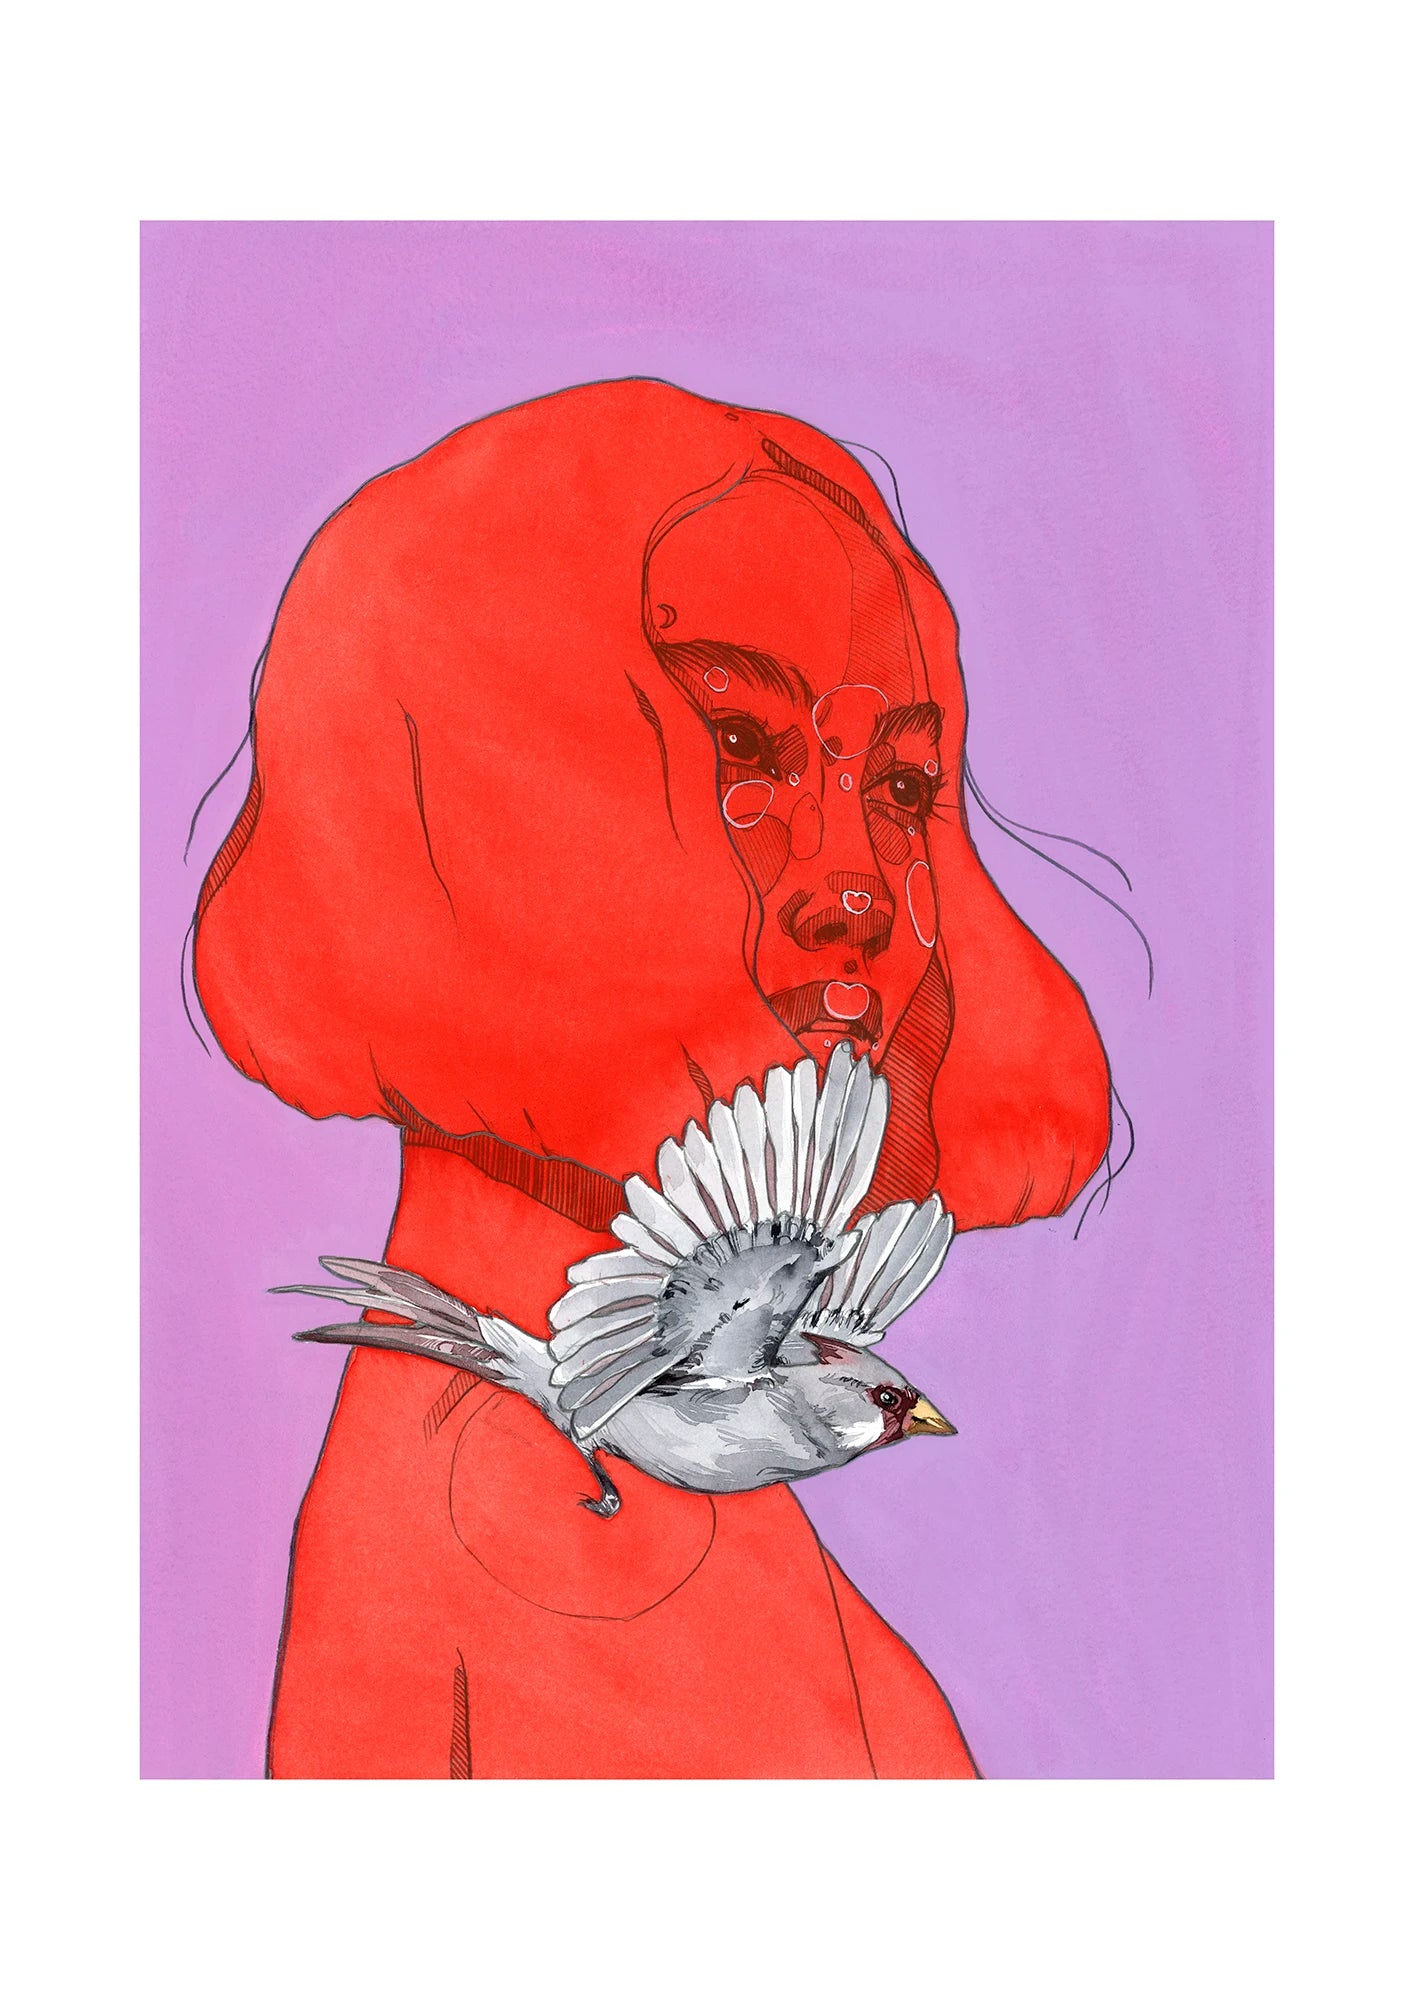 Desert cardinal print by Polina Bright